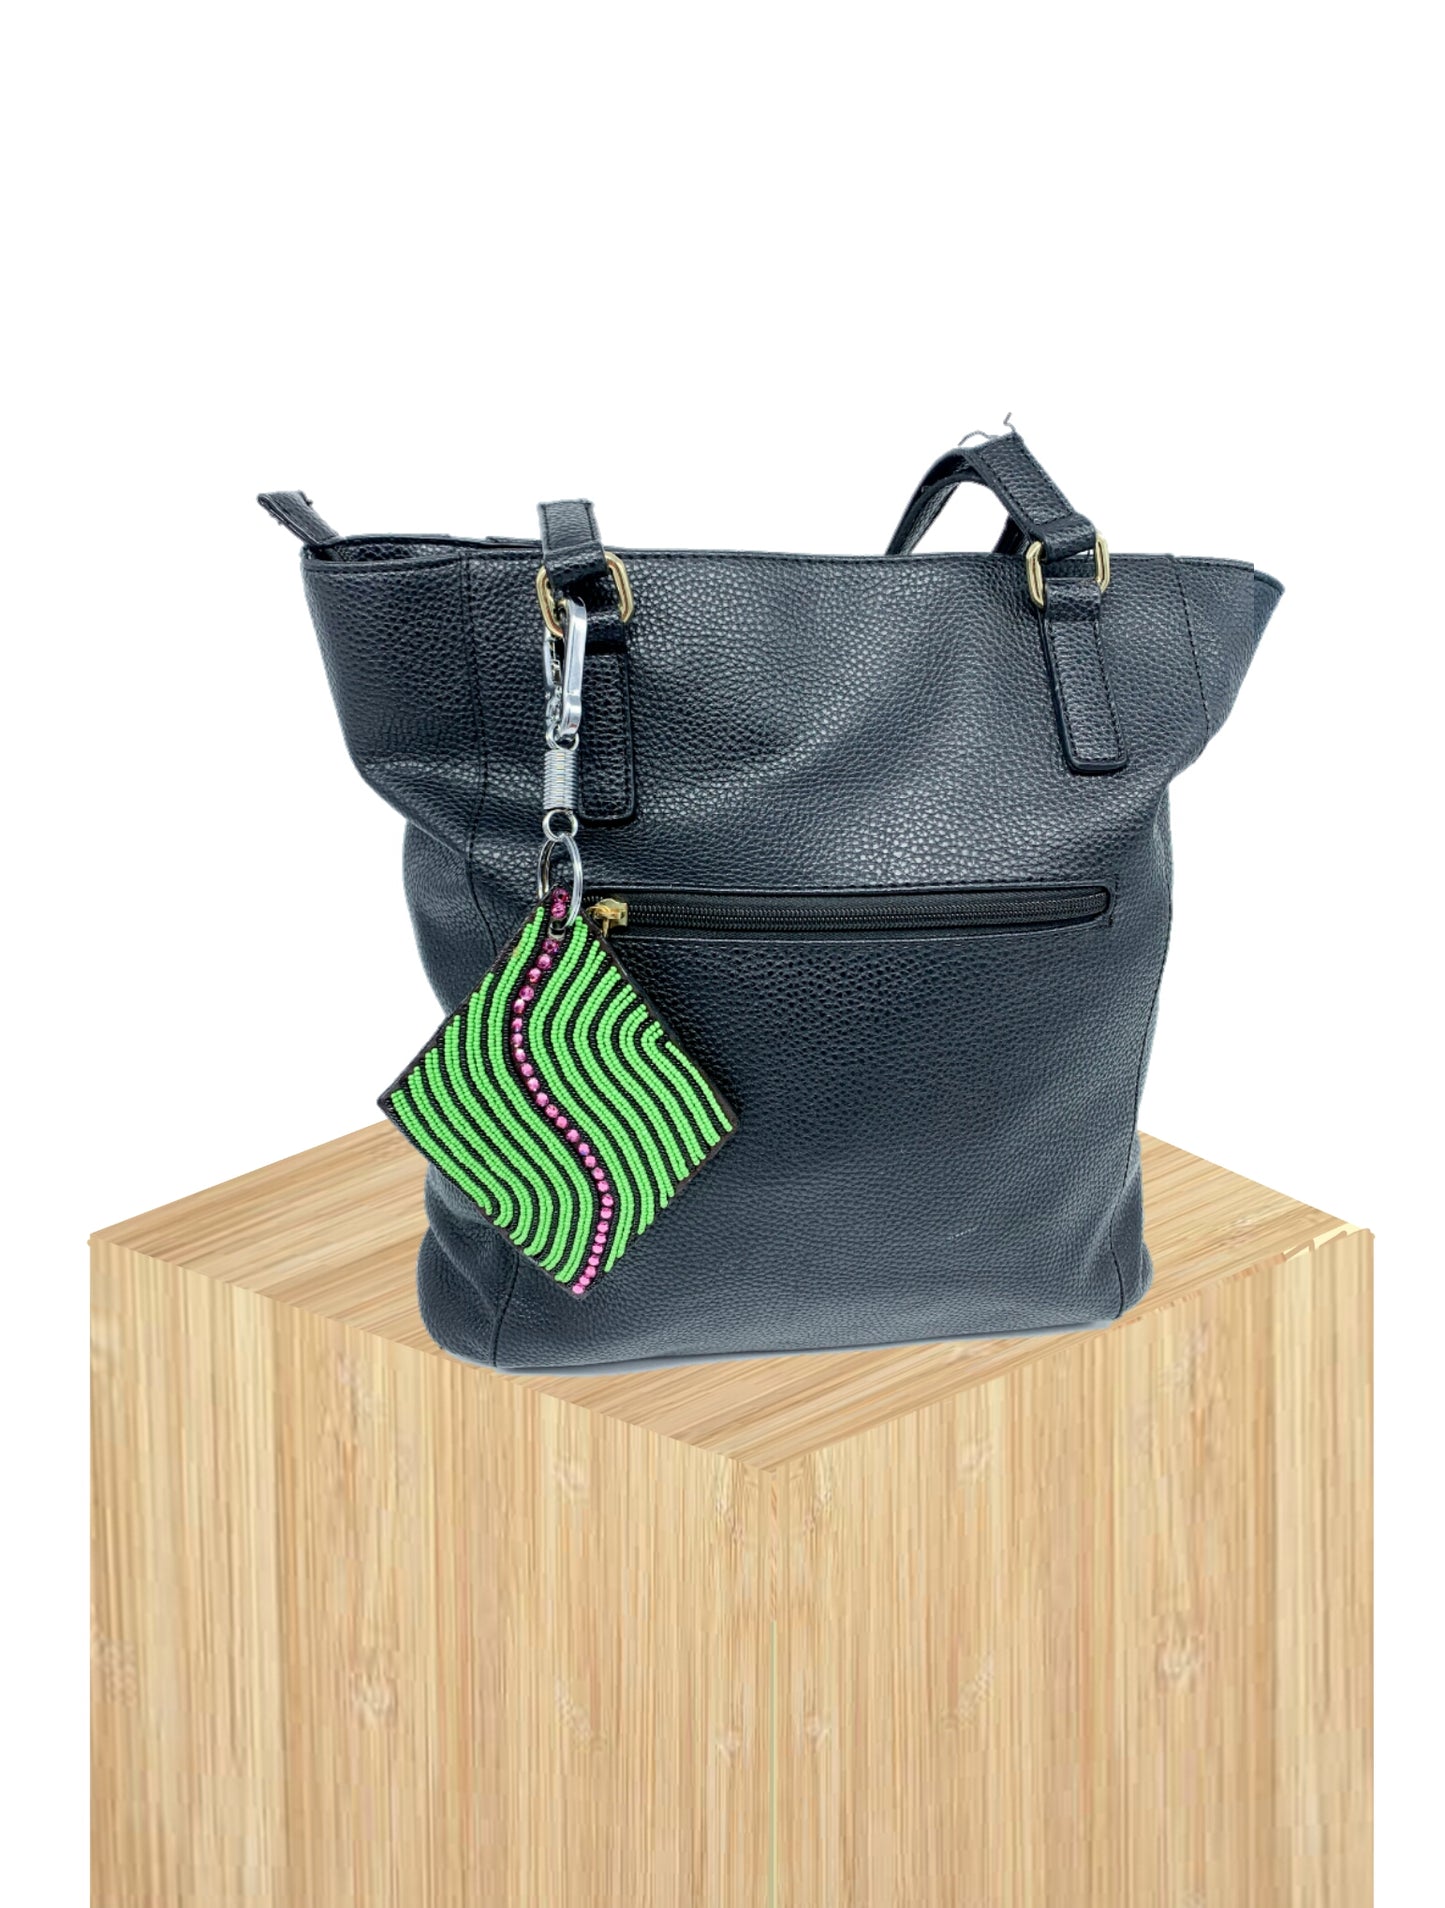 Handbag Charm, handbag Accessories/ Key Chain/ Leather/ Beaded/ Handmade-The Jewel